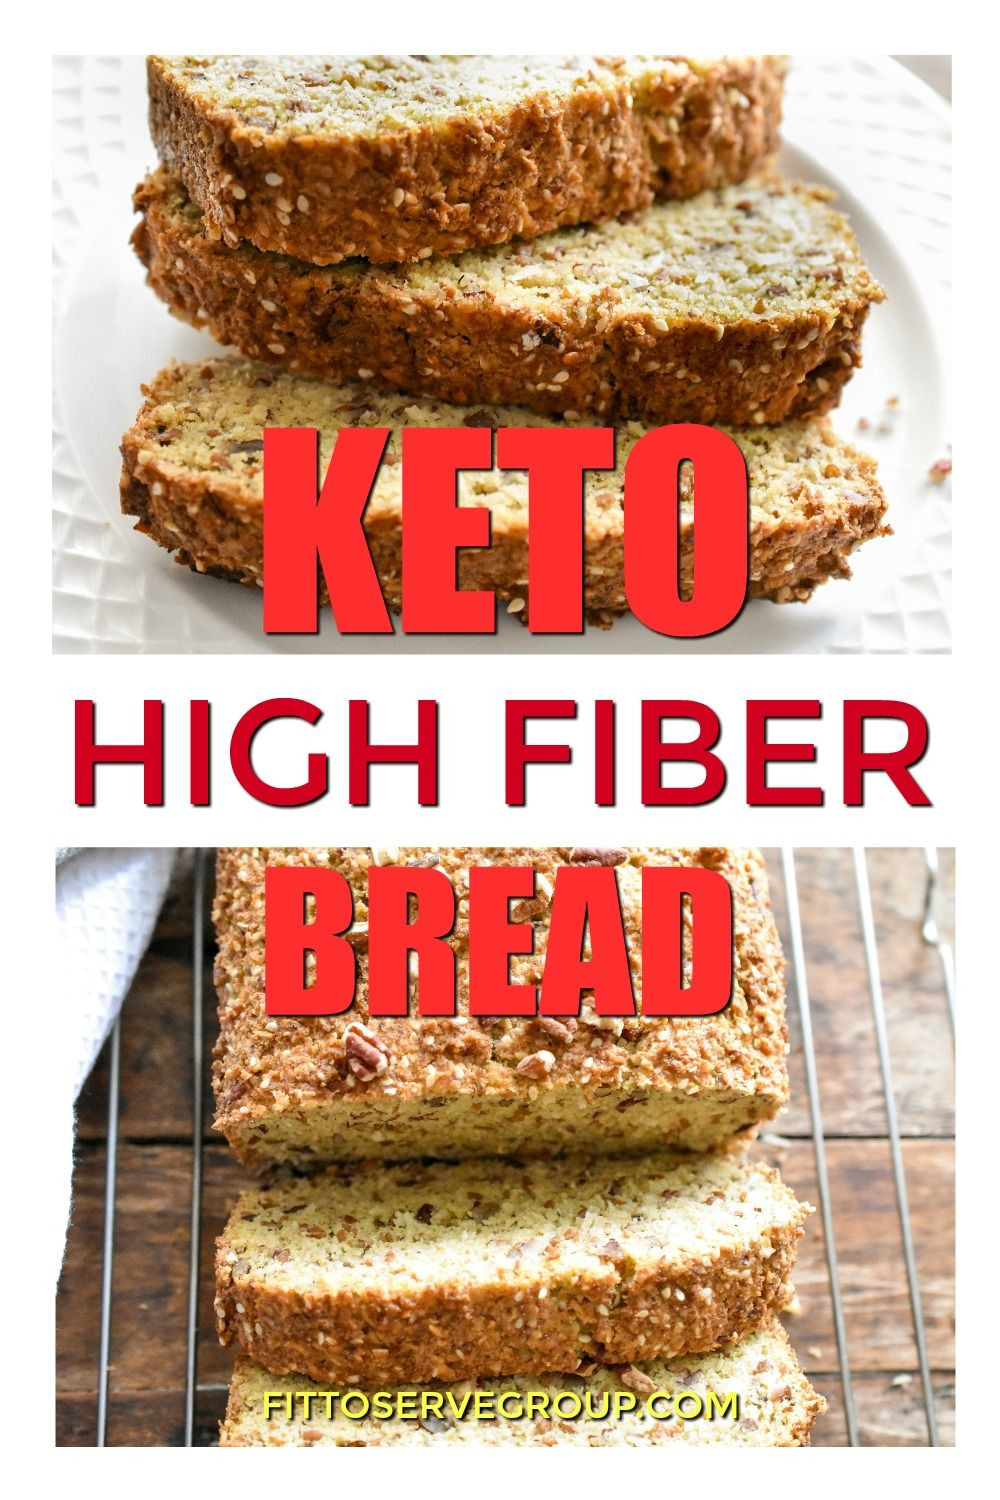 High Fiber Keto Recipes
 Keto High Fiber Bread in 2020